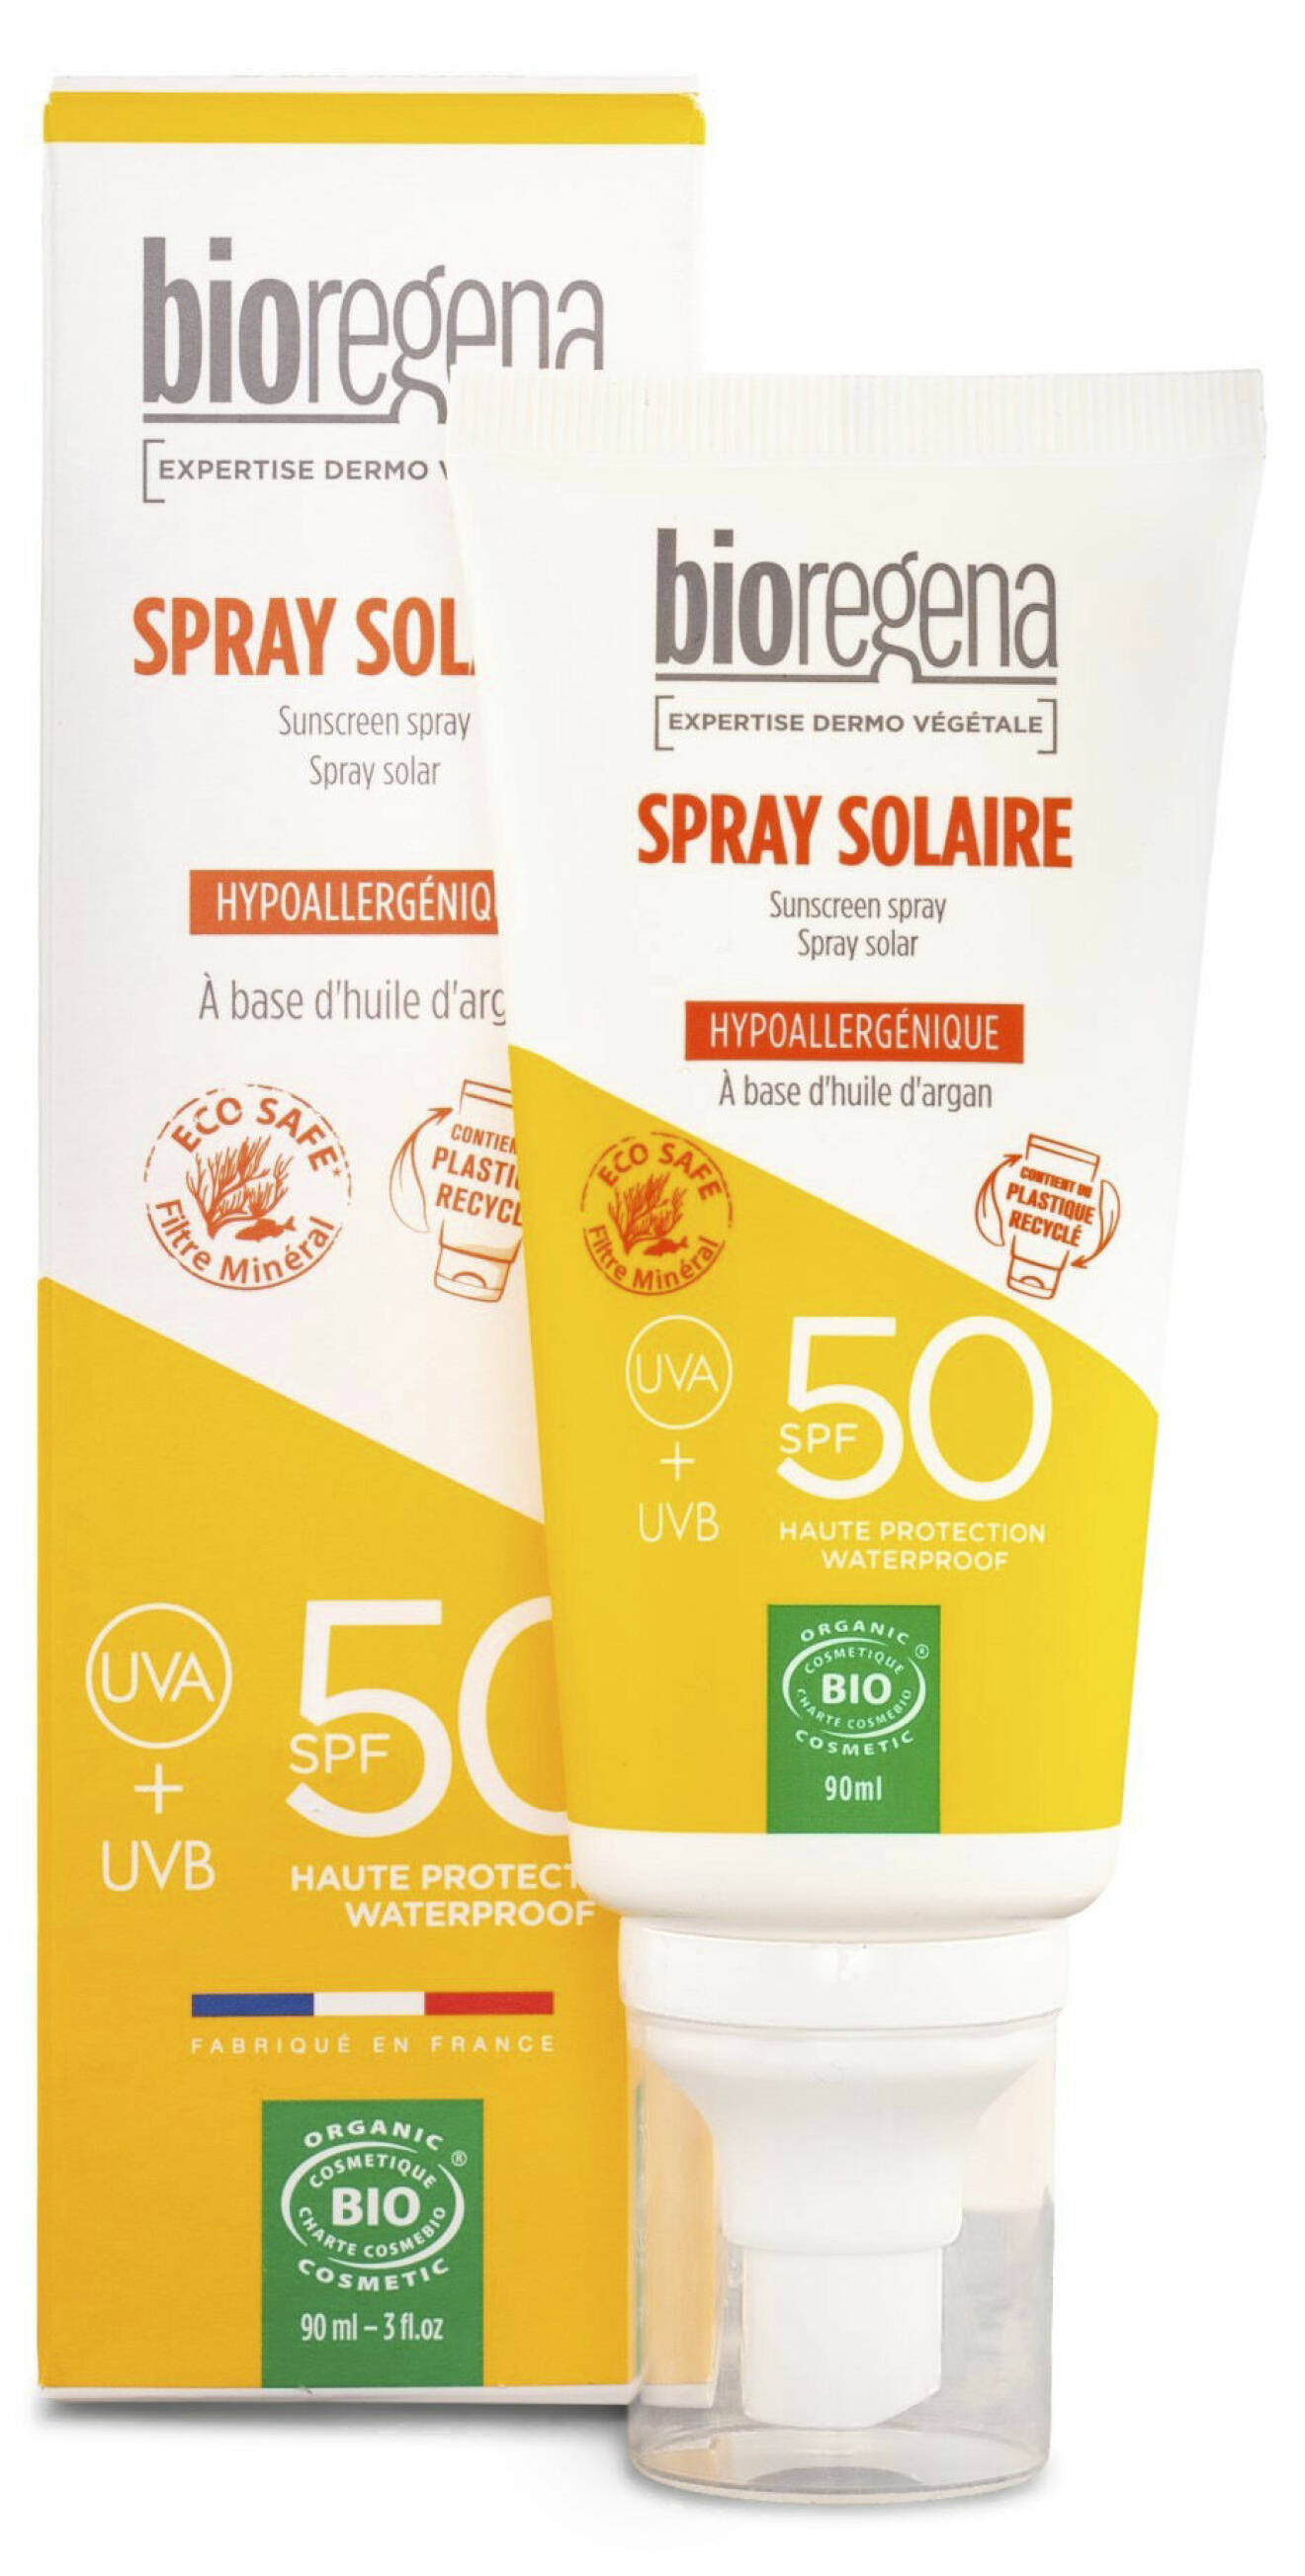 Bioregena Spray Solaire SPF50, UVA, UVB